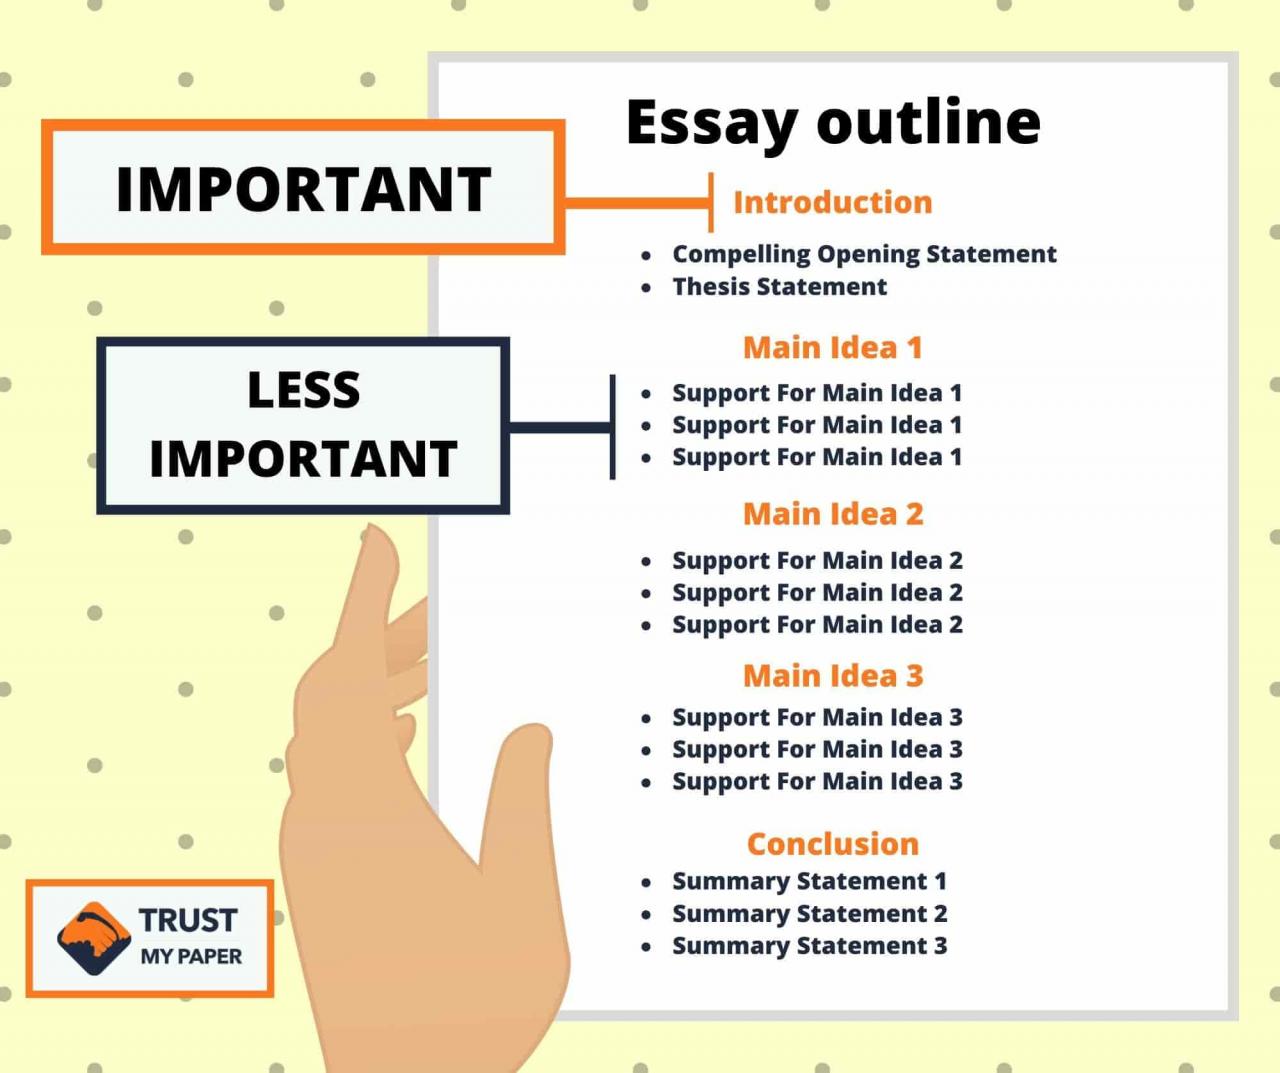 A good outline for an essay